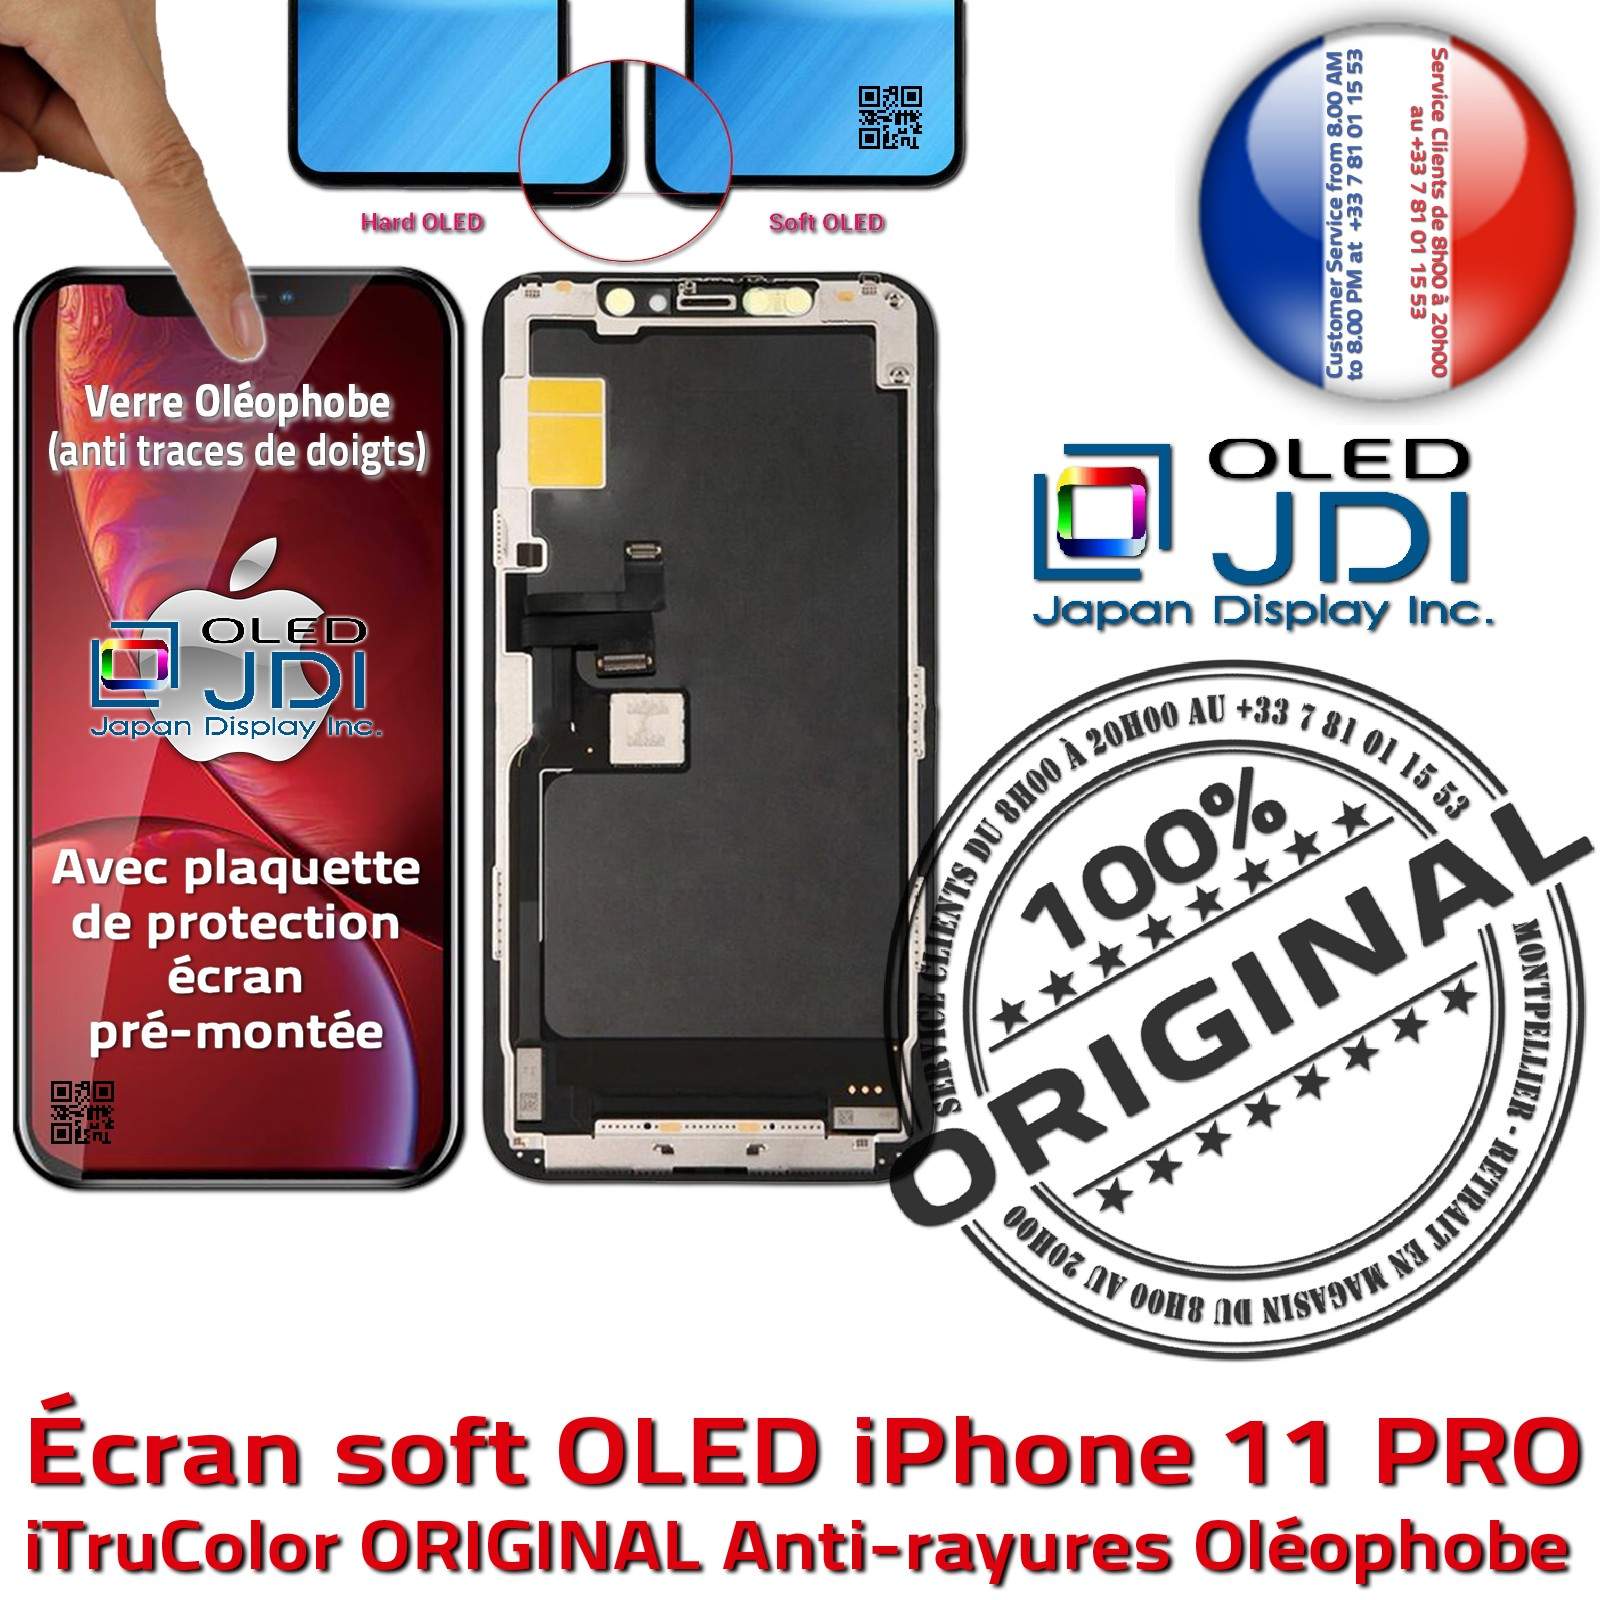 Ecran iPhone 11 Pro OLED 